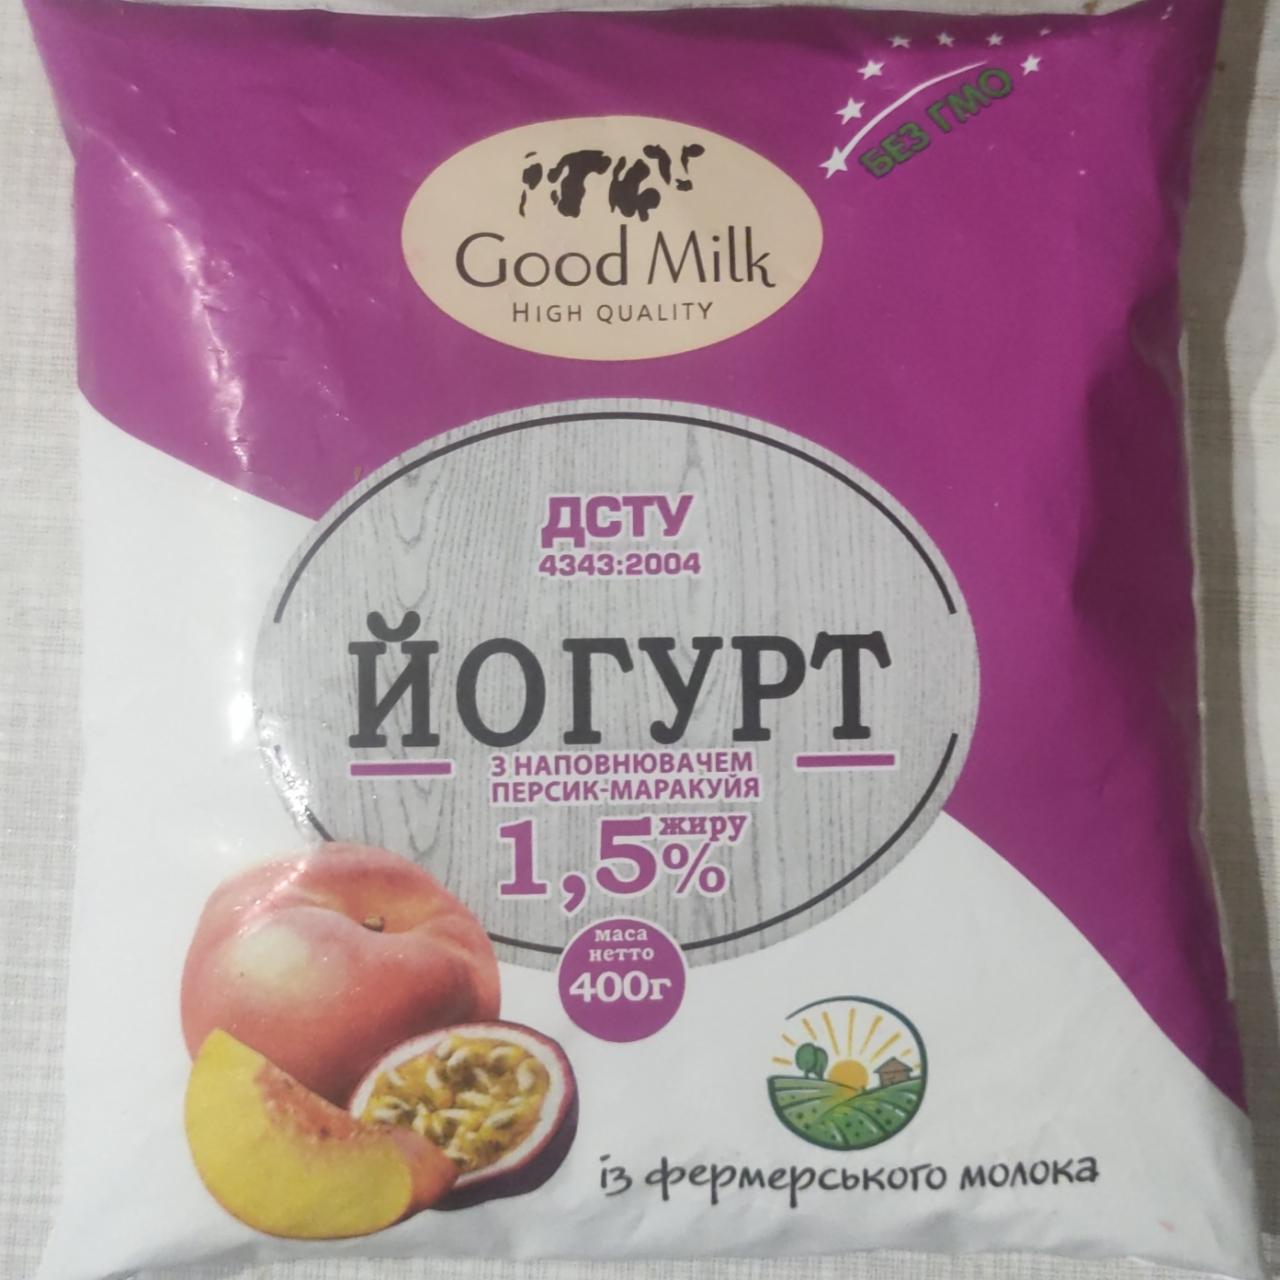 Фото - йогурт 1.5% жира с наполнителем персик-маракуйя Good Milk